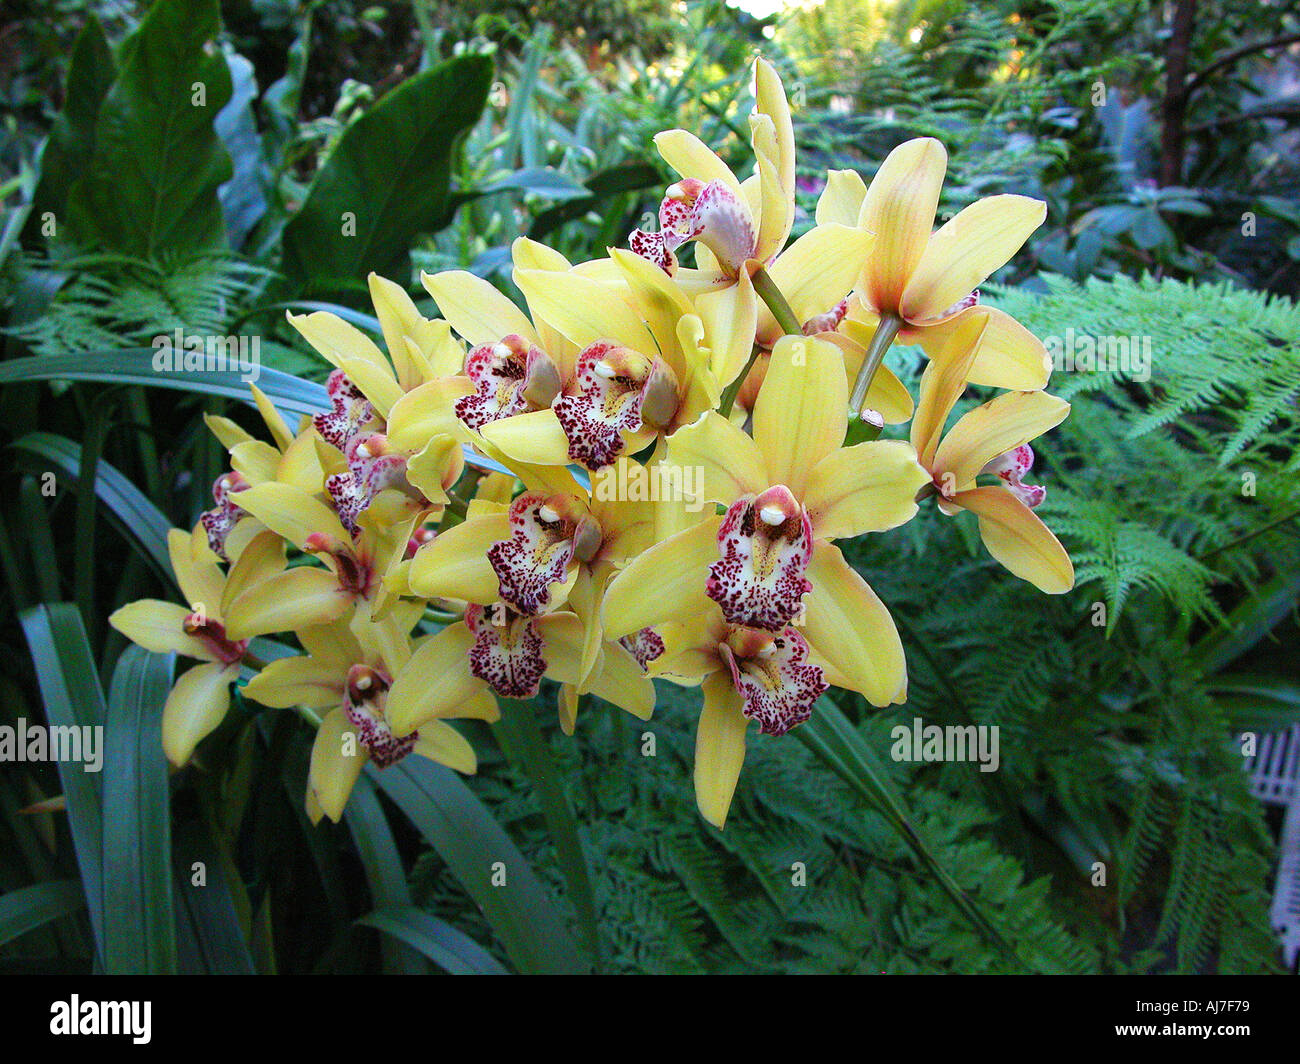 Orchids On Display At Botanical Gardens Washington D C Stock Photo